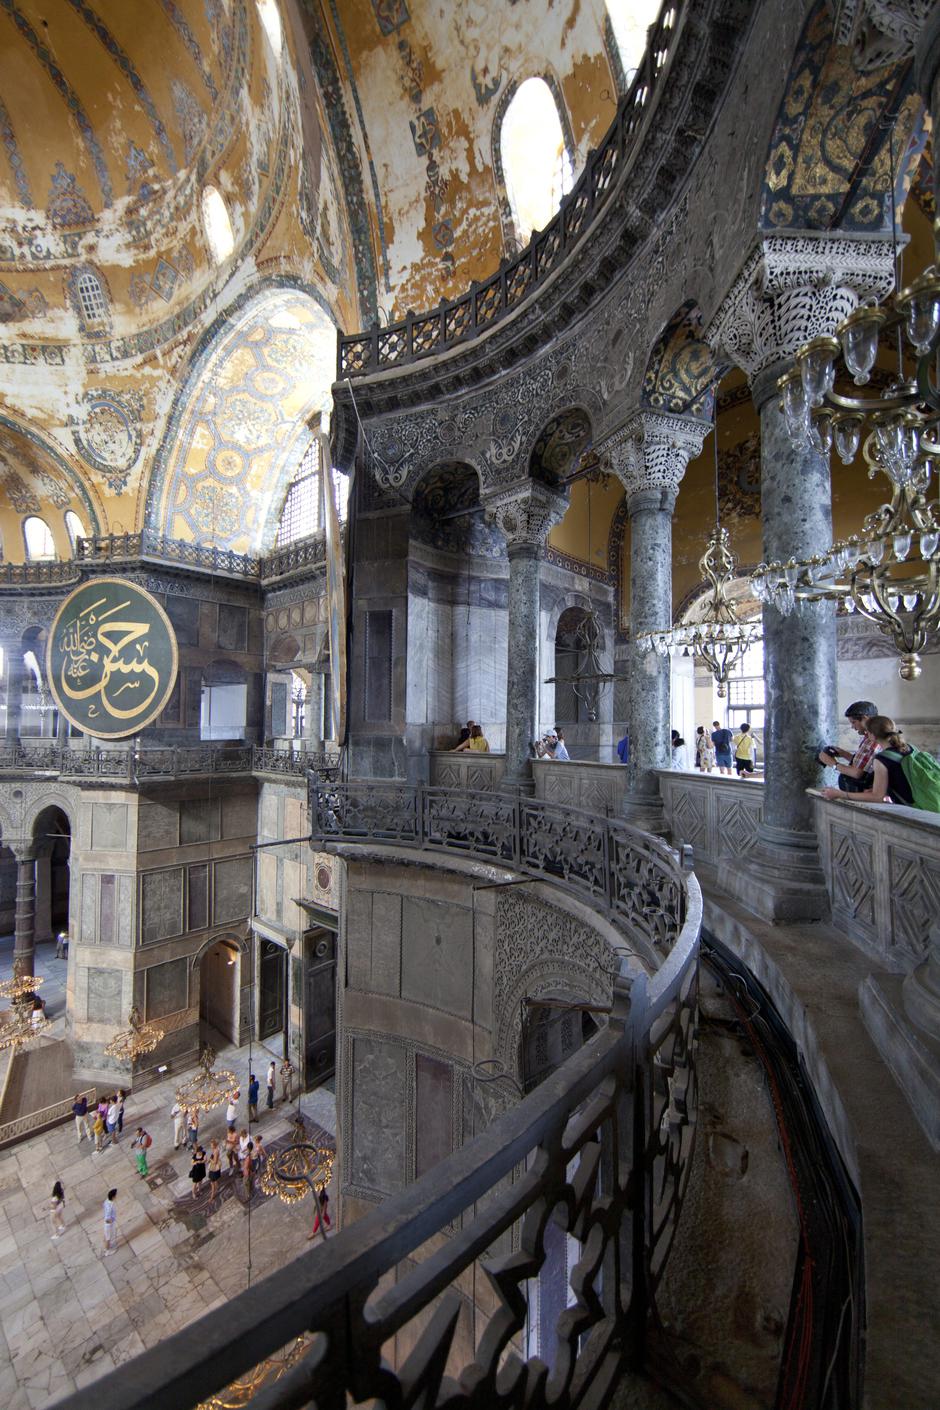 Hagia Sophia (Aya Sophia) in Istanbul